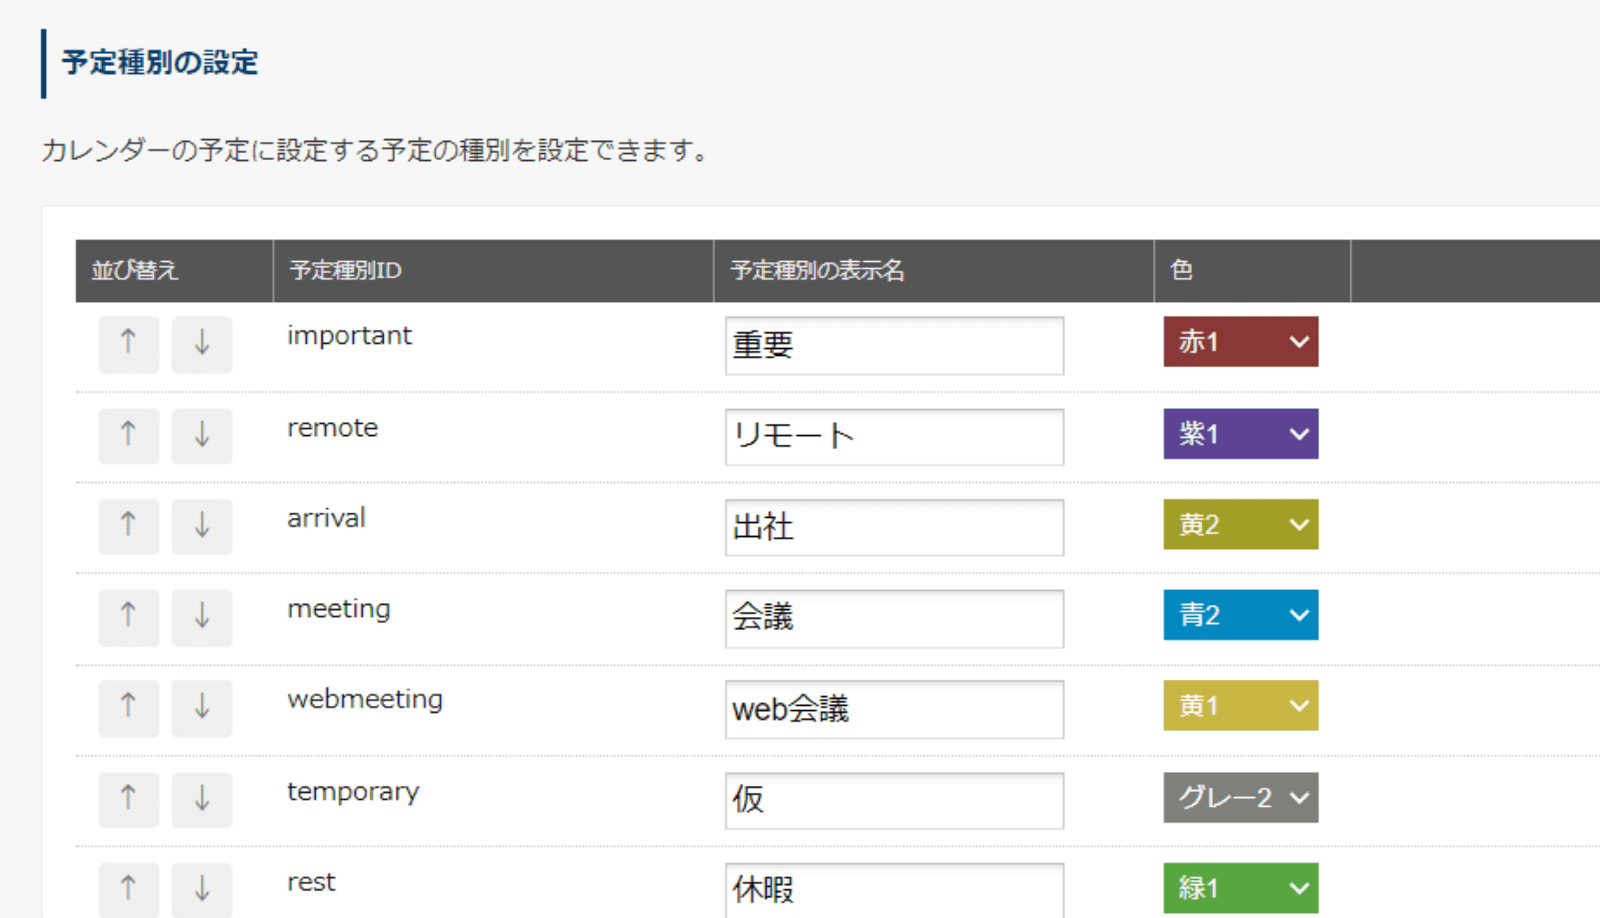 rakumo カレンダー 管理者用「予定種別登録」画面